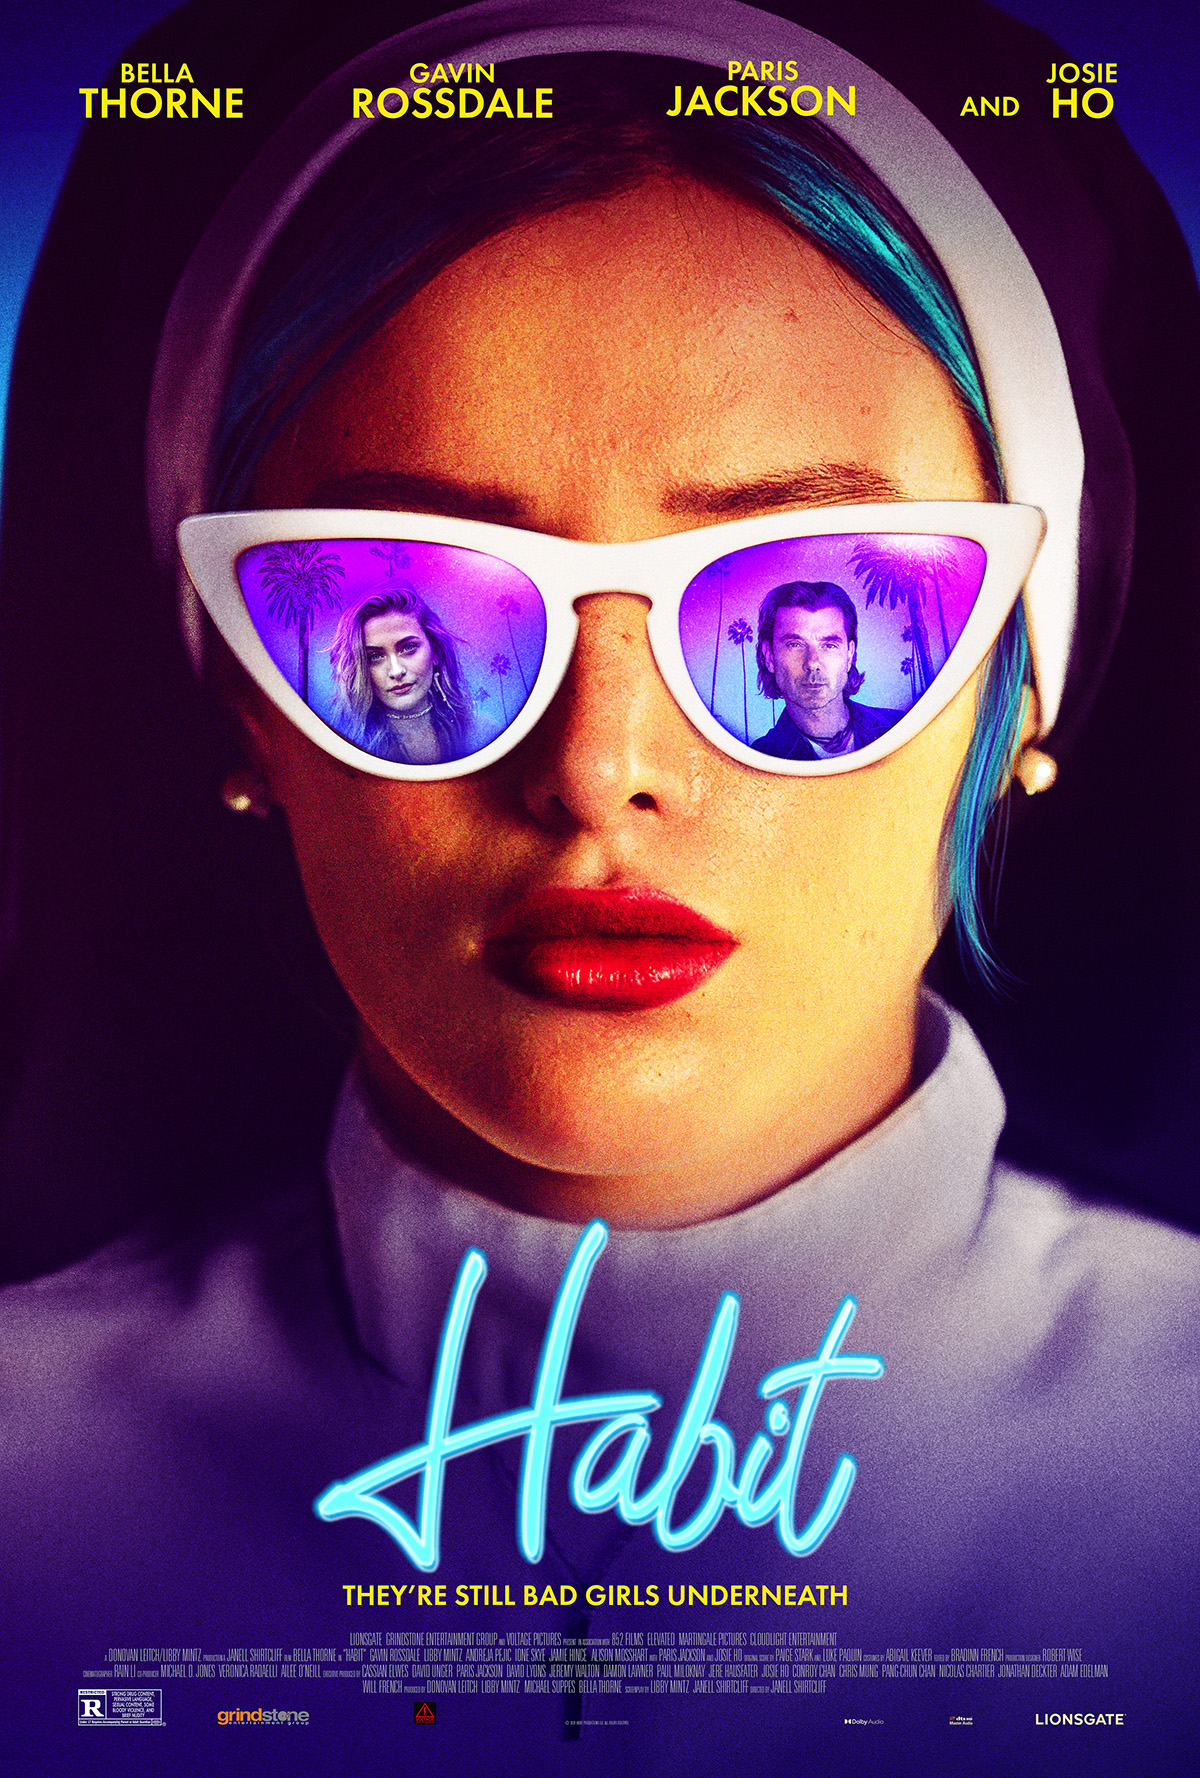 HABIT starring Bella Thorne and Gavin Rossdale